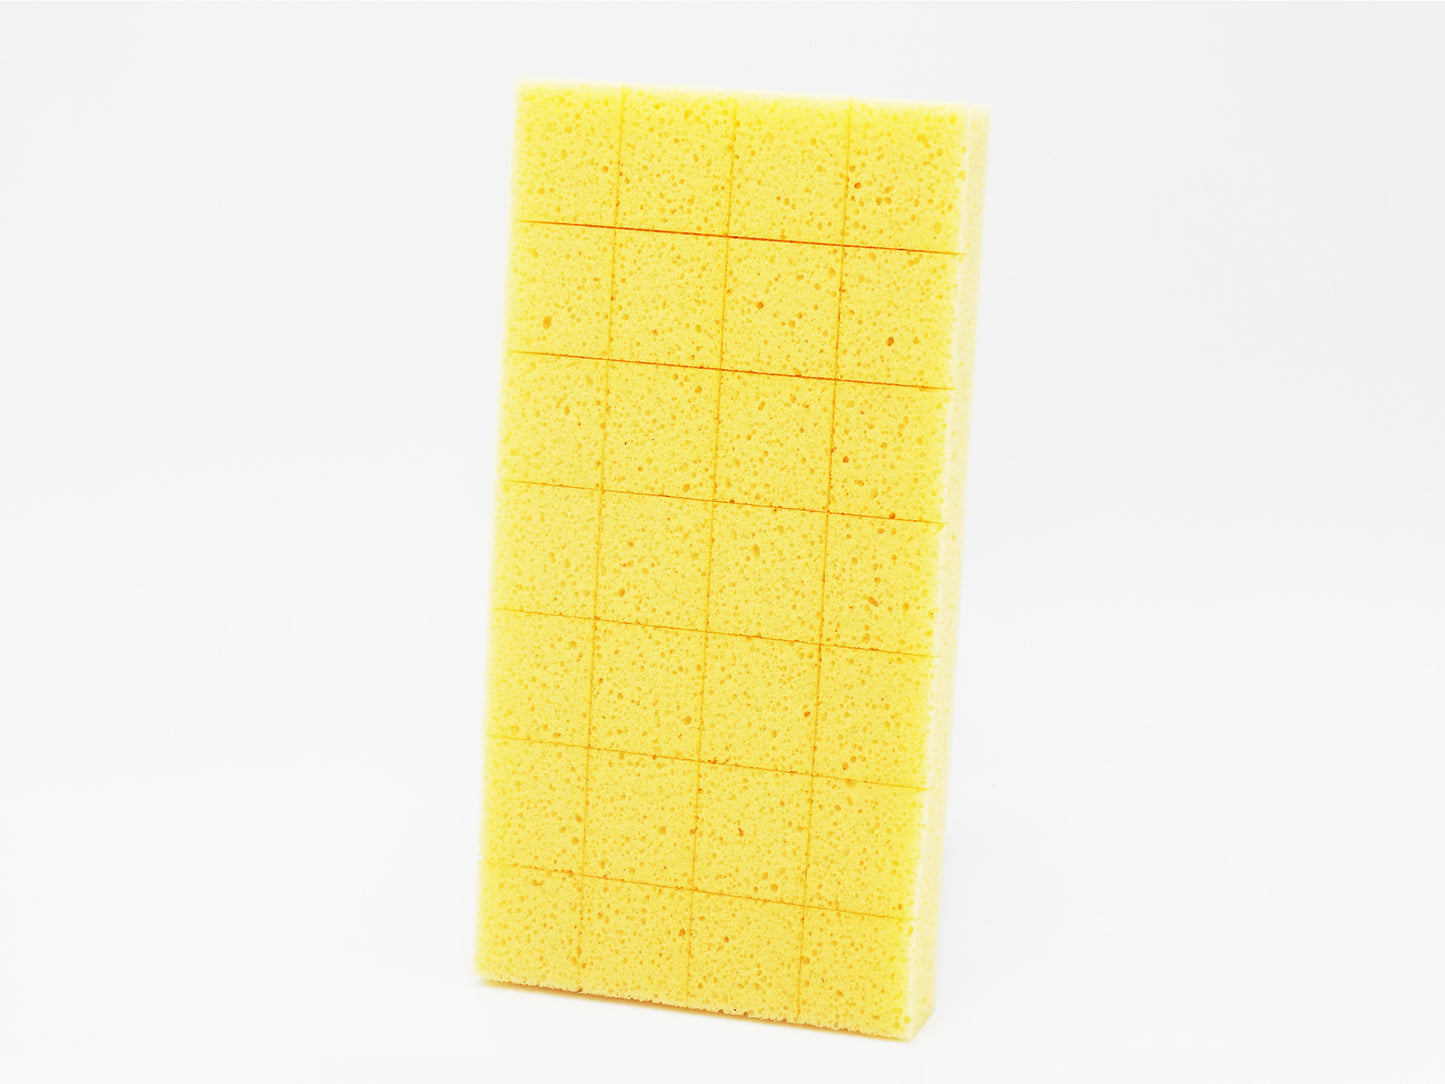 Notched sponge trowel